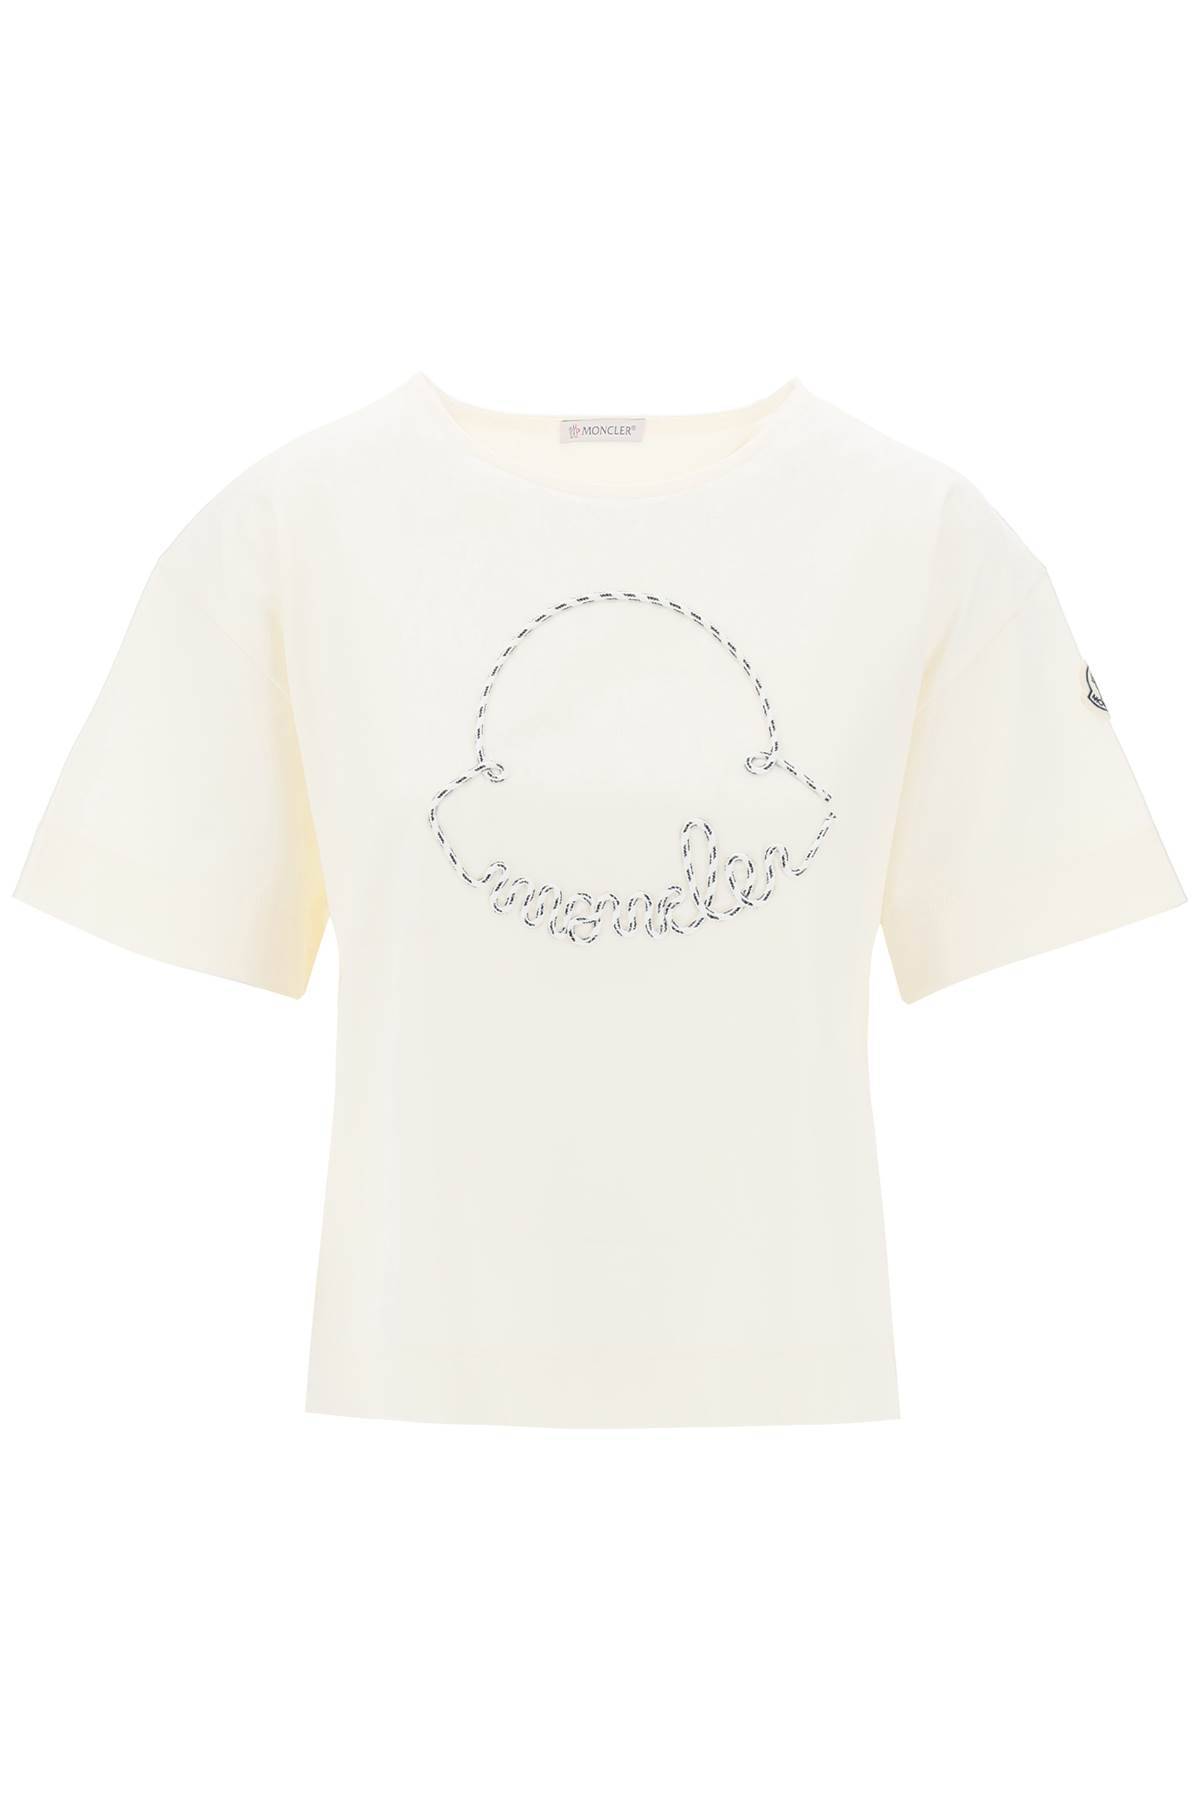 Moncler MONCLER t-shirt with nautical rope logo design